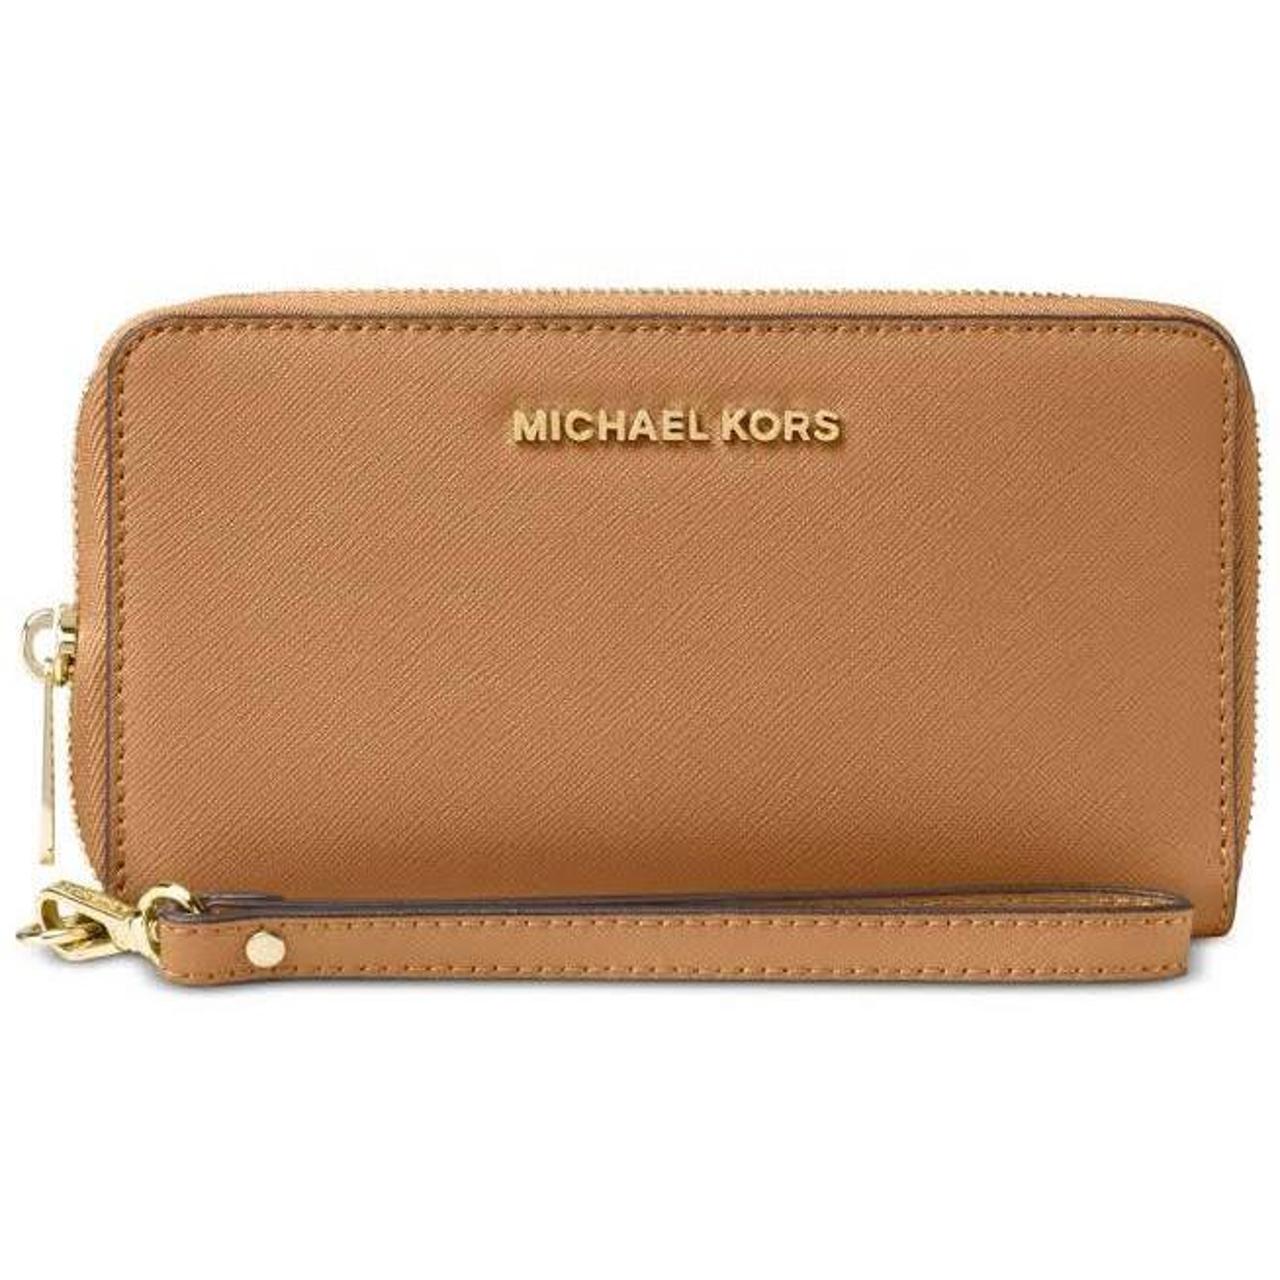 Michael Kors Wallet  Michael kors wallet, Tan wallet, Purses